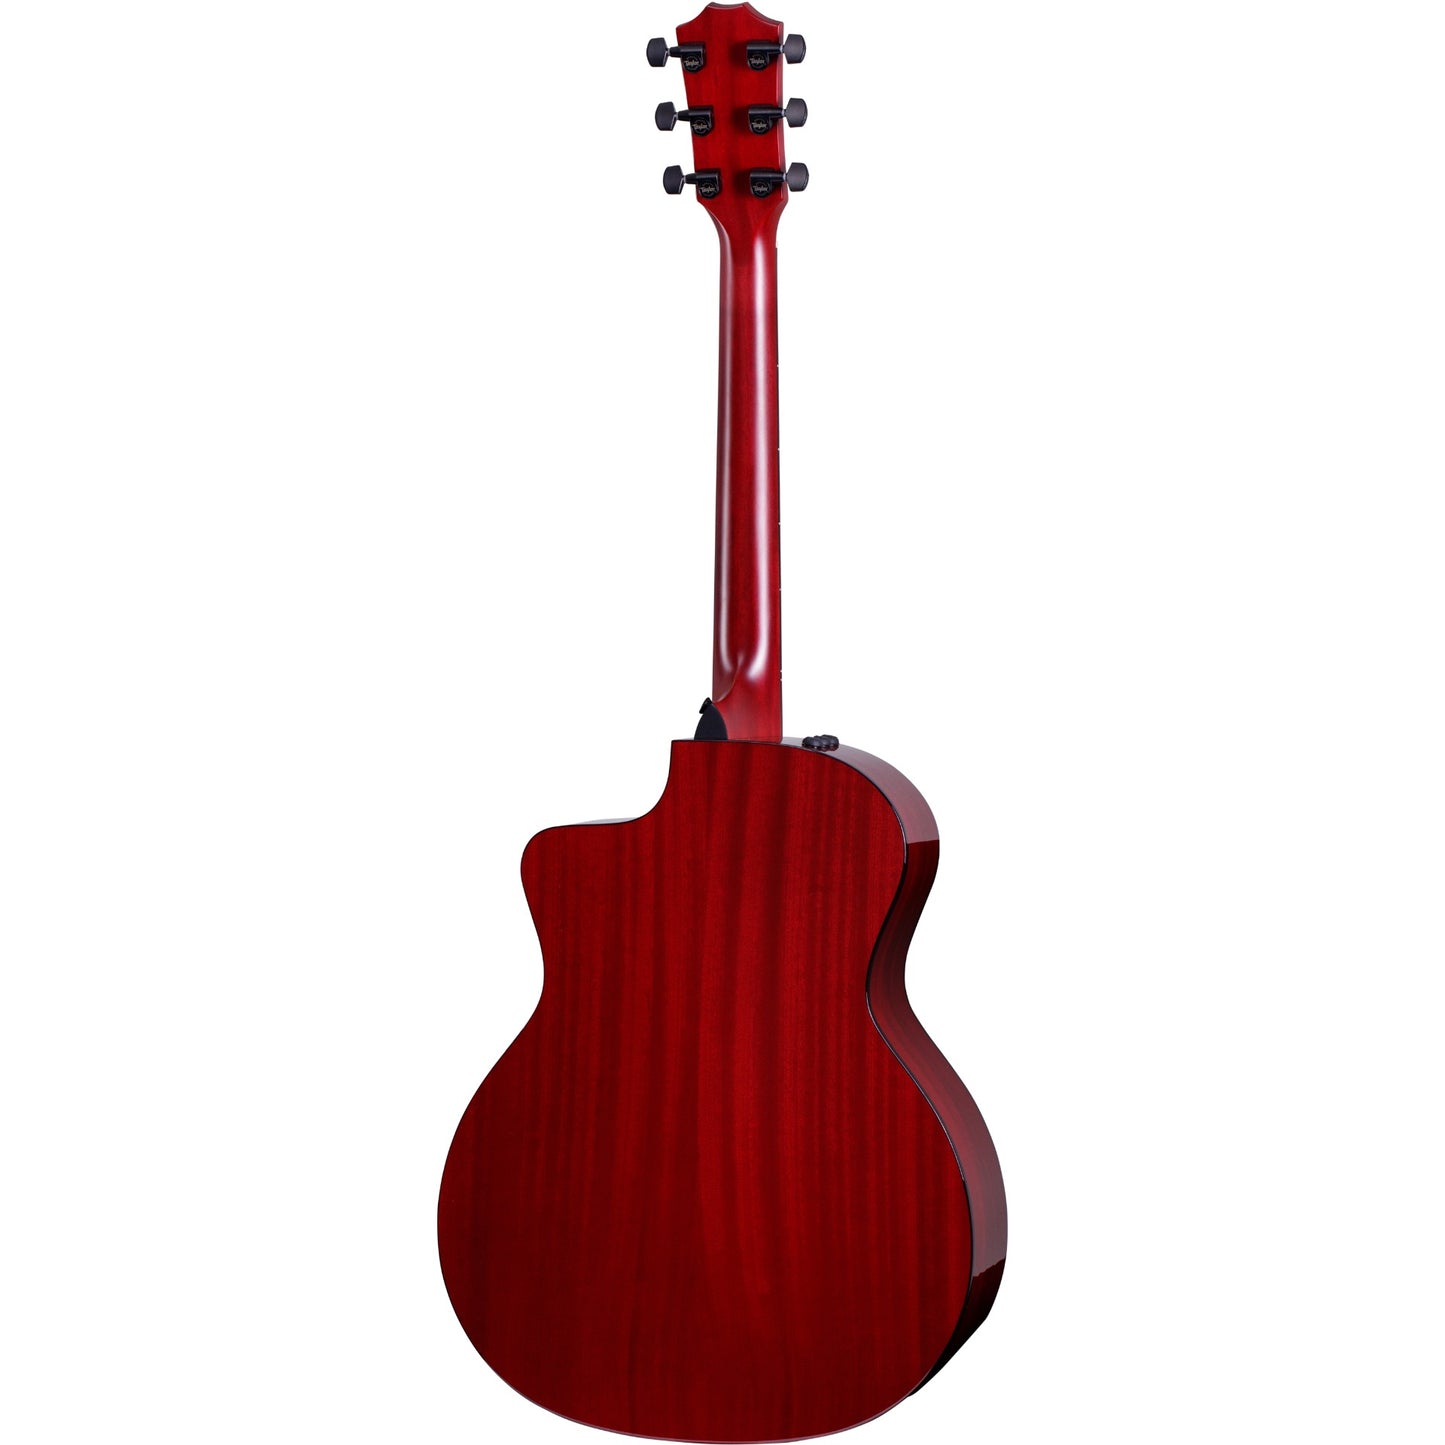 Taylor 224CE DLX LTD Acoustic Electric Guitar - Trans Red